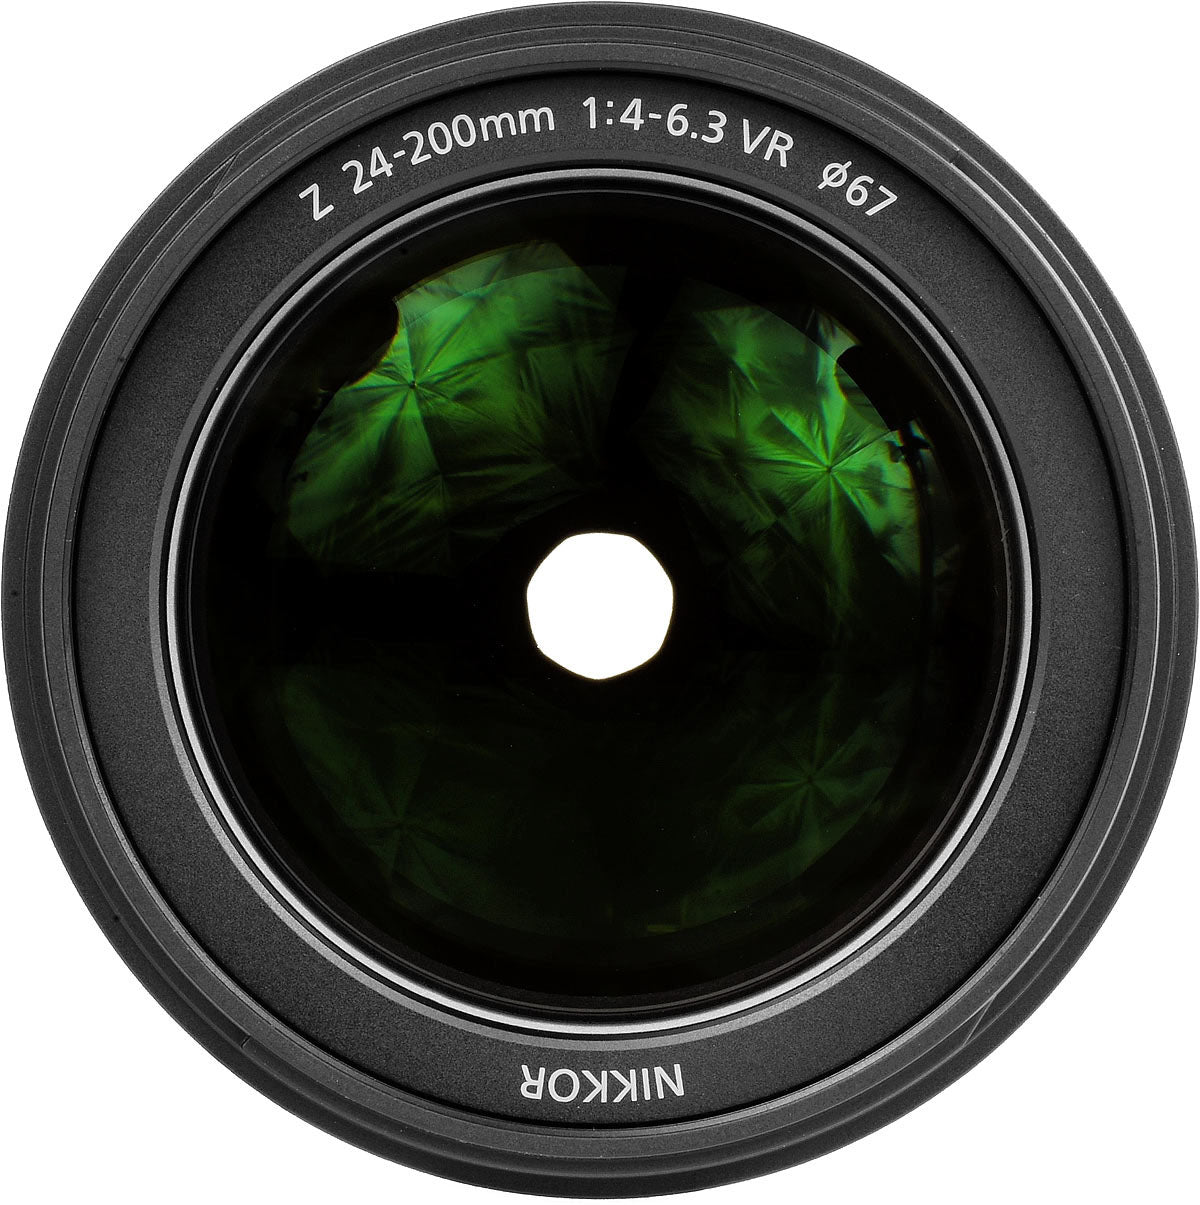 Nikon NIKKOR Z 24-200mm f/4-6.3 Lens (20092) Intl Model Bundle + 64GB SD Card